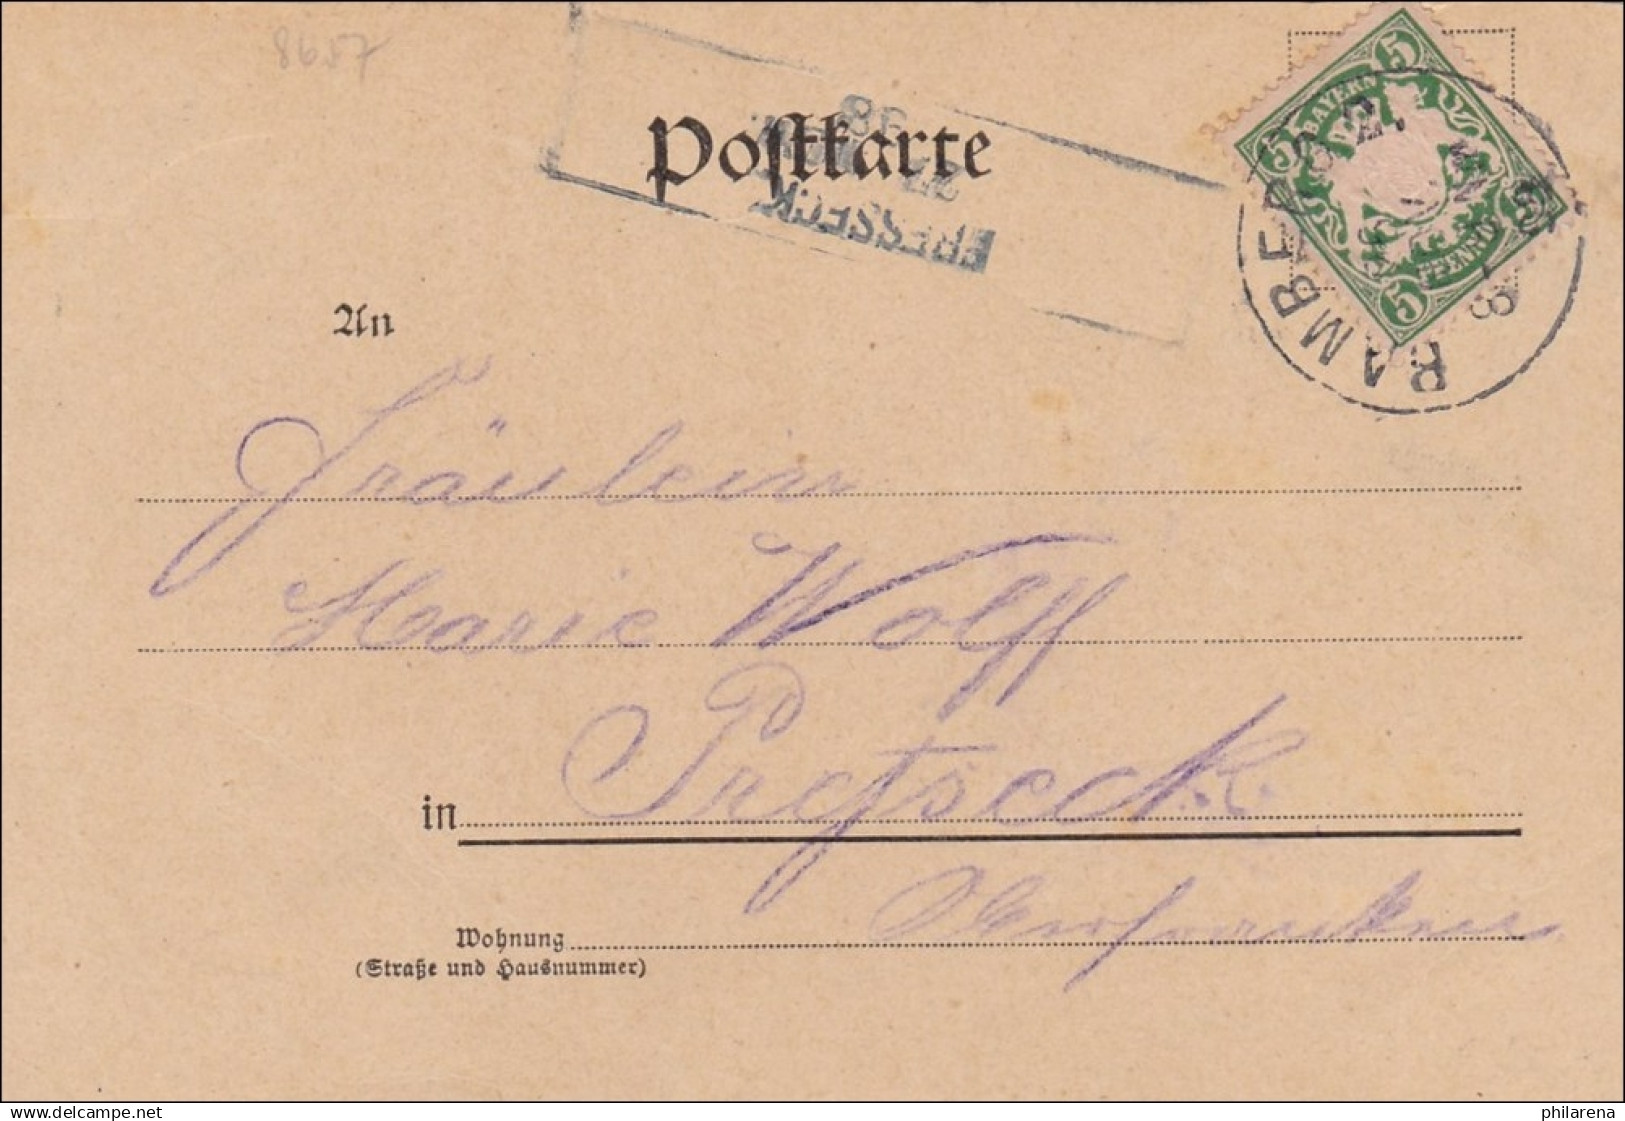 Bayern: 1898, Postkarte Aus Bamberg - Fresseck - Lettres & Documents